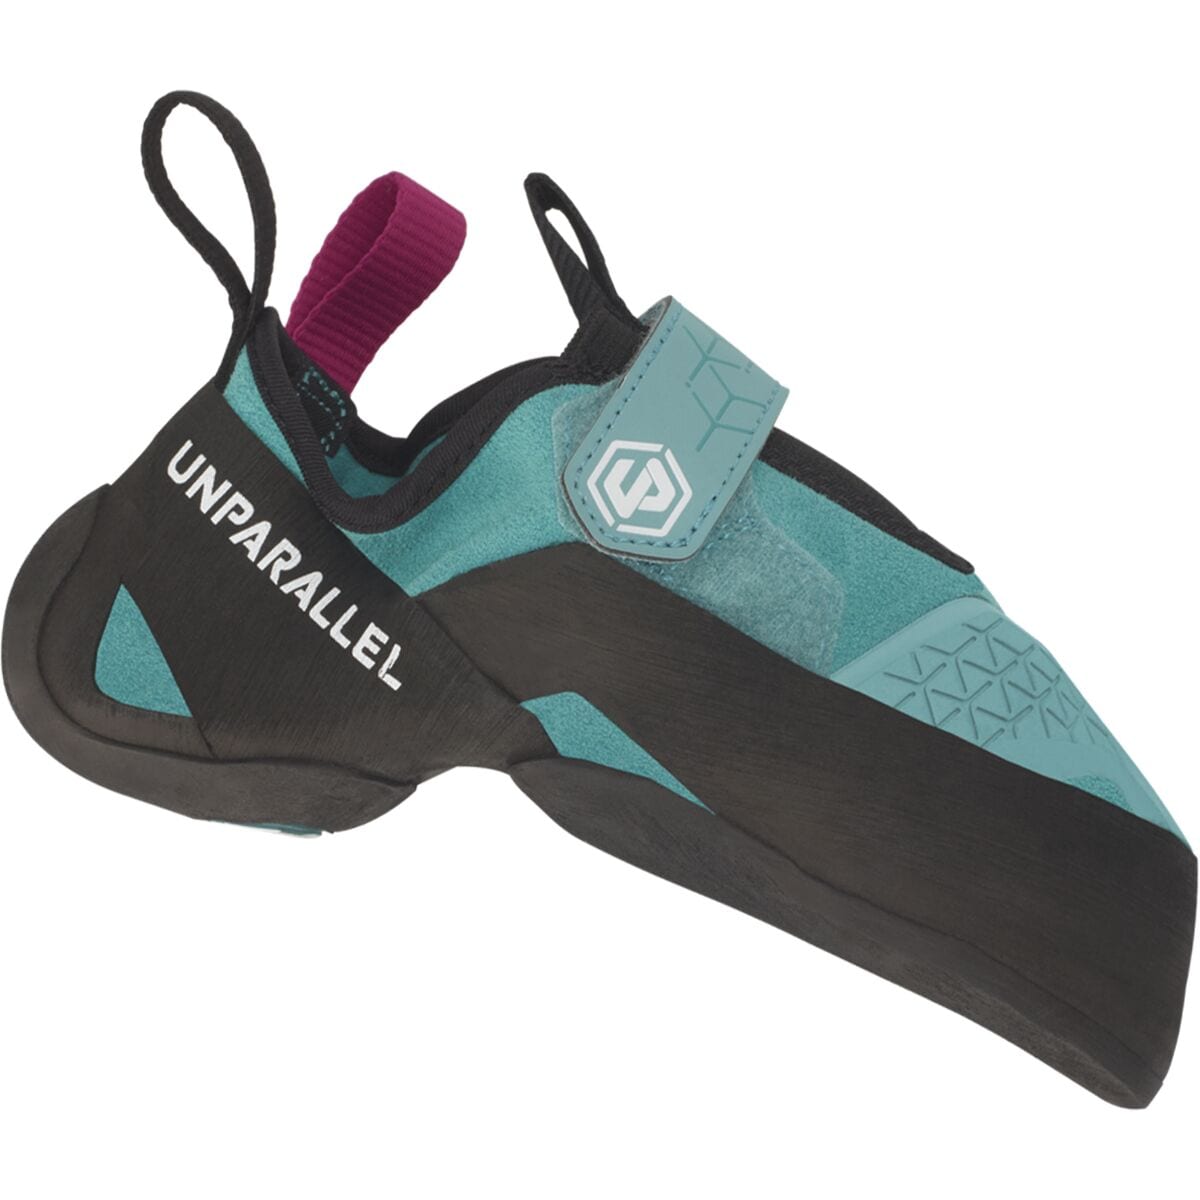 UnParallel Flagship LV Shoe